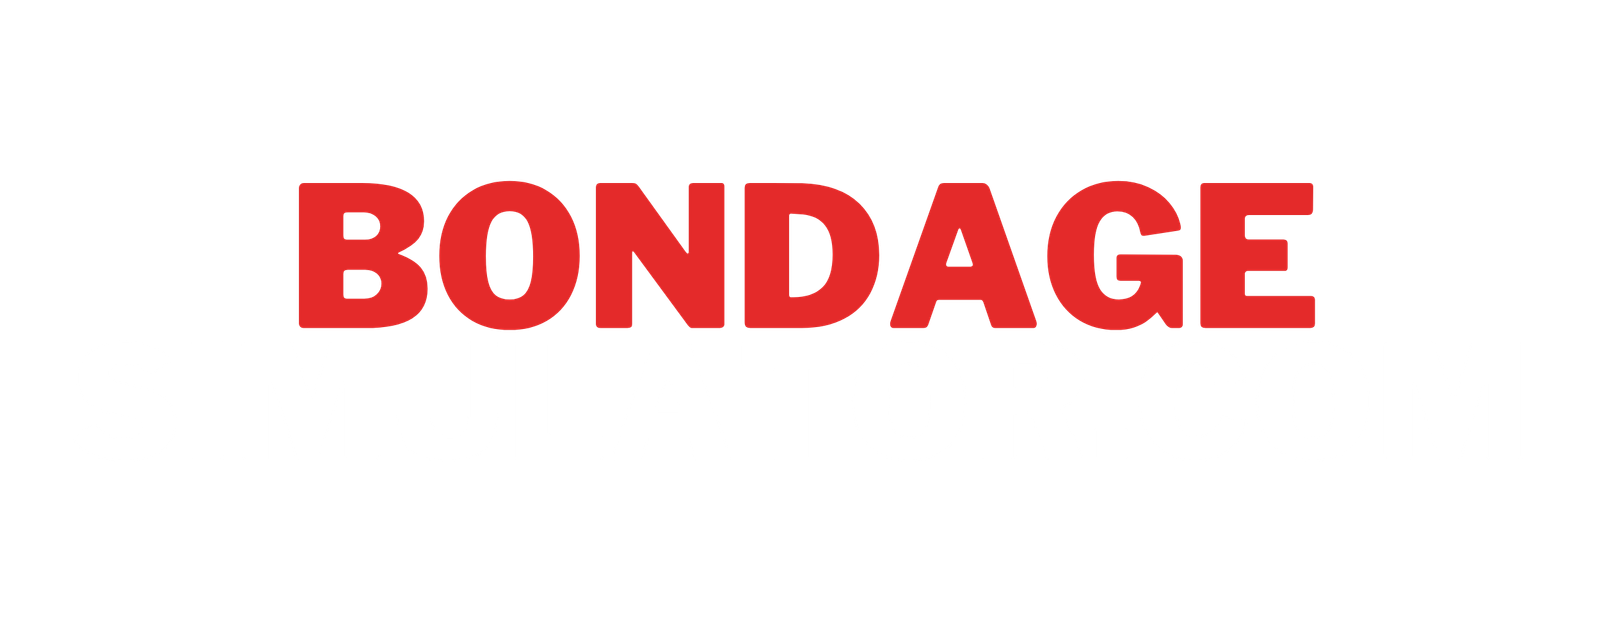 BondageSimulator.com